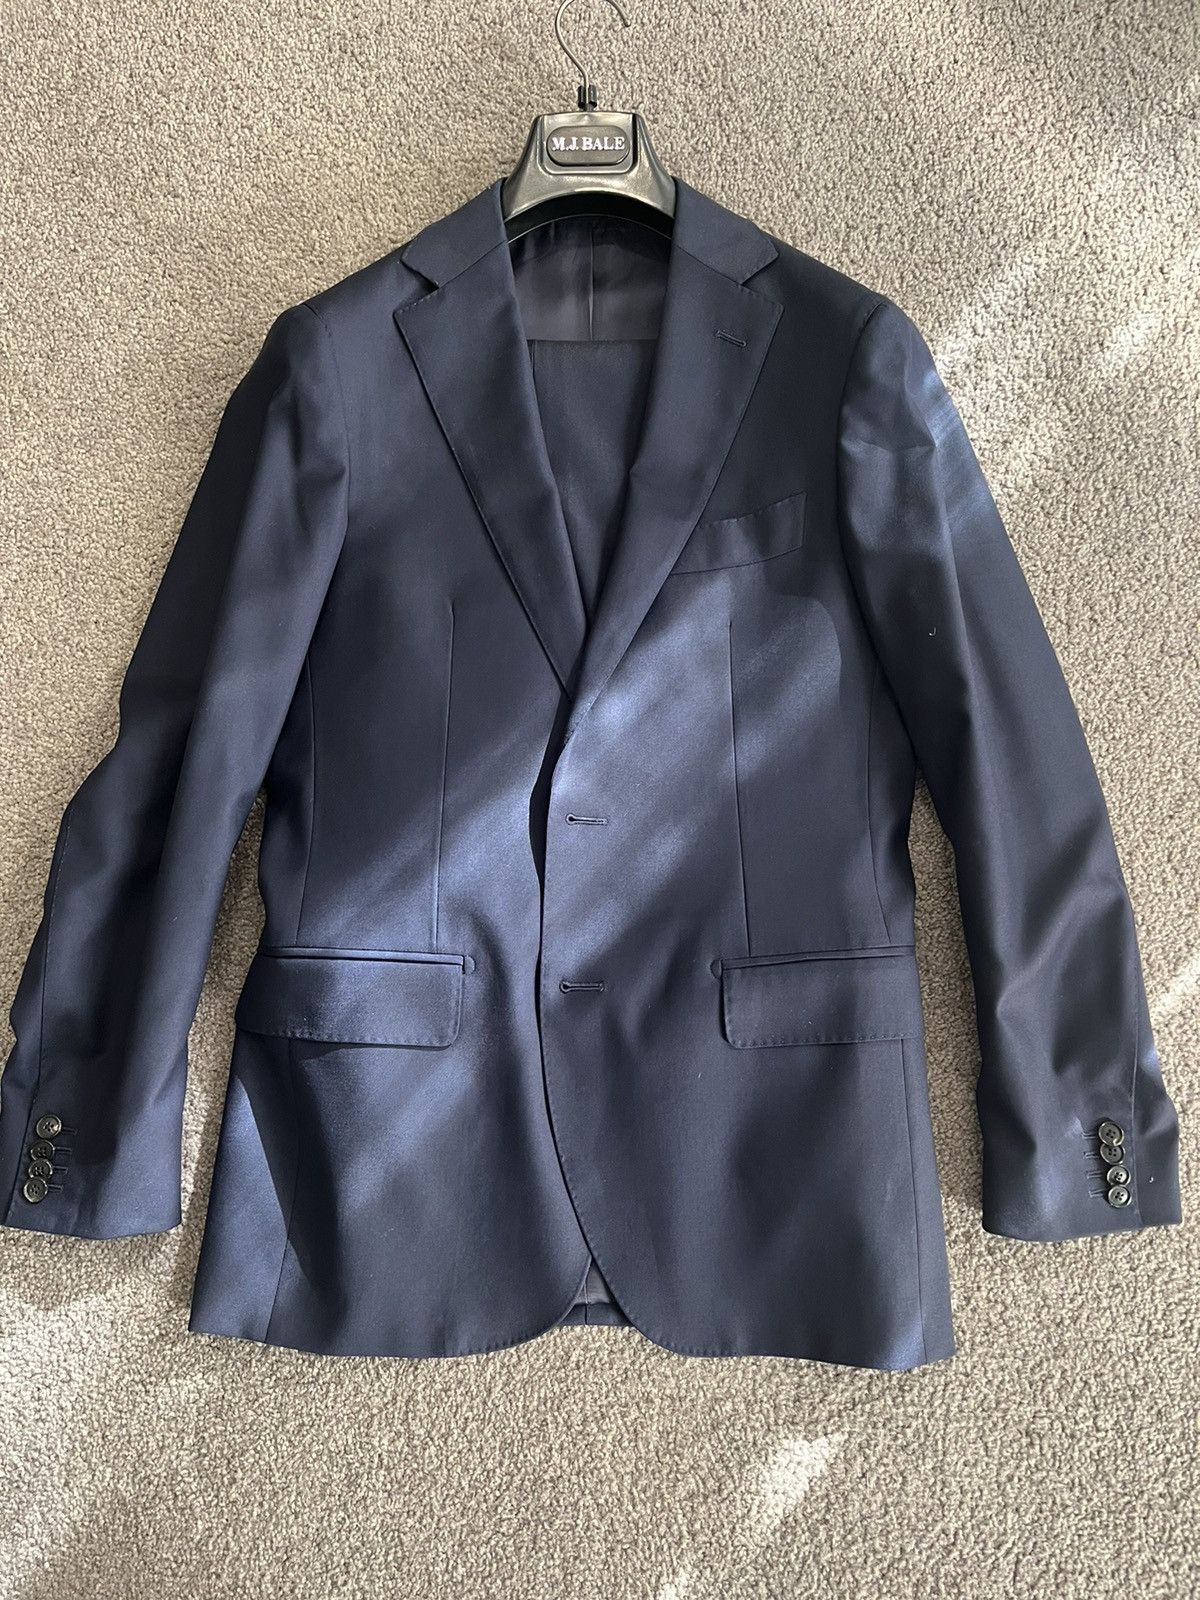 MJ Bale Navy Suit Jacket | Grailed